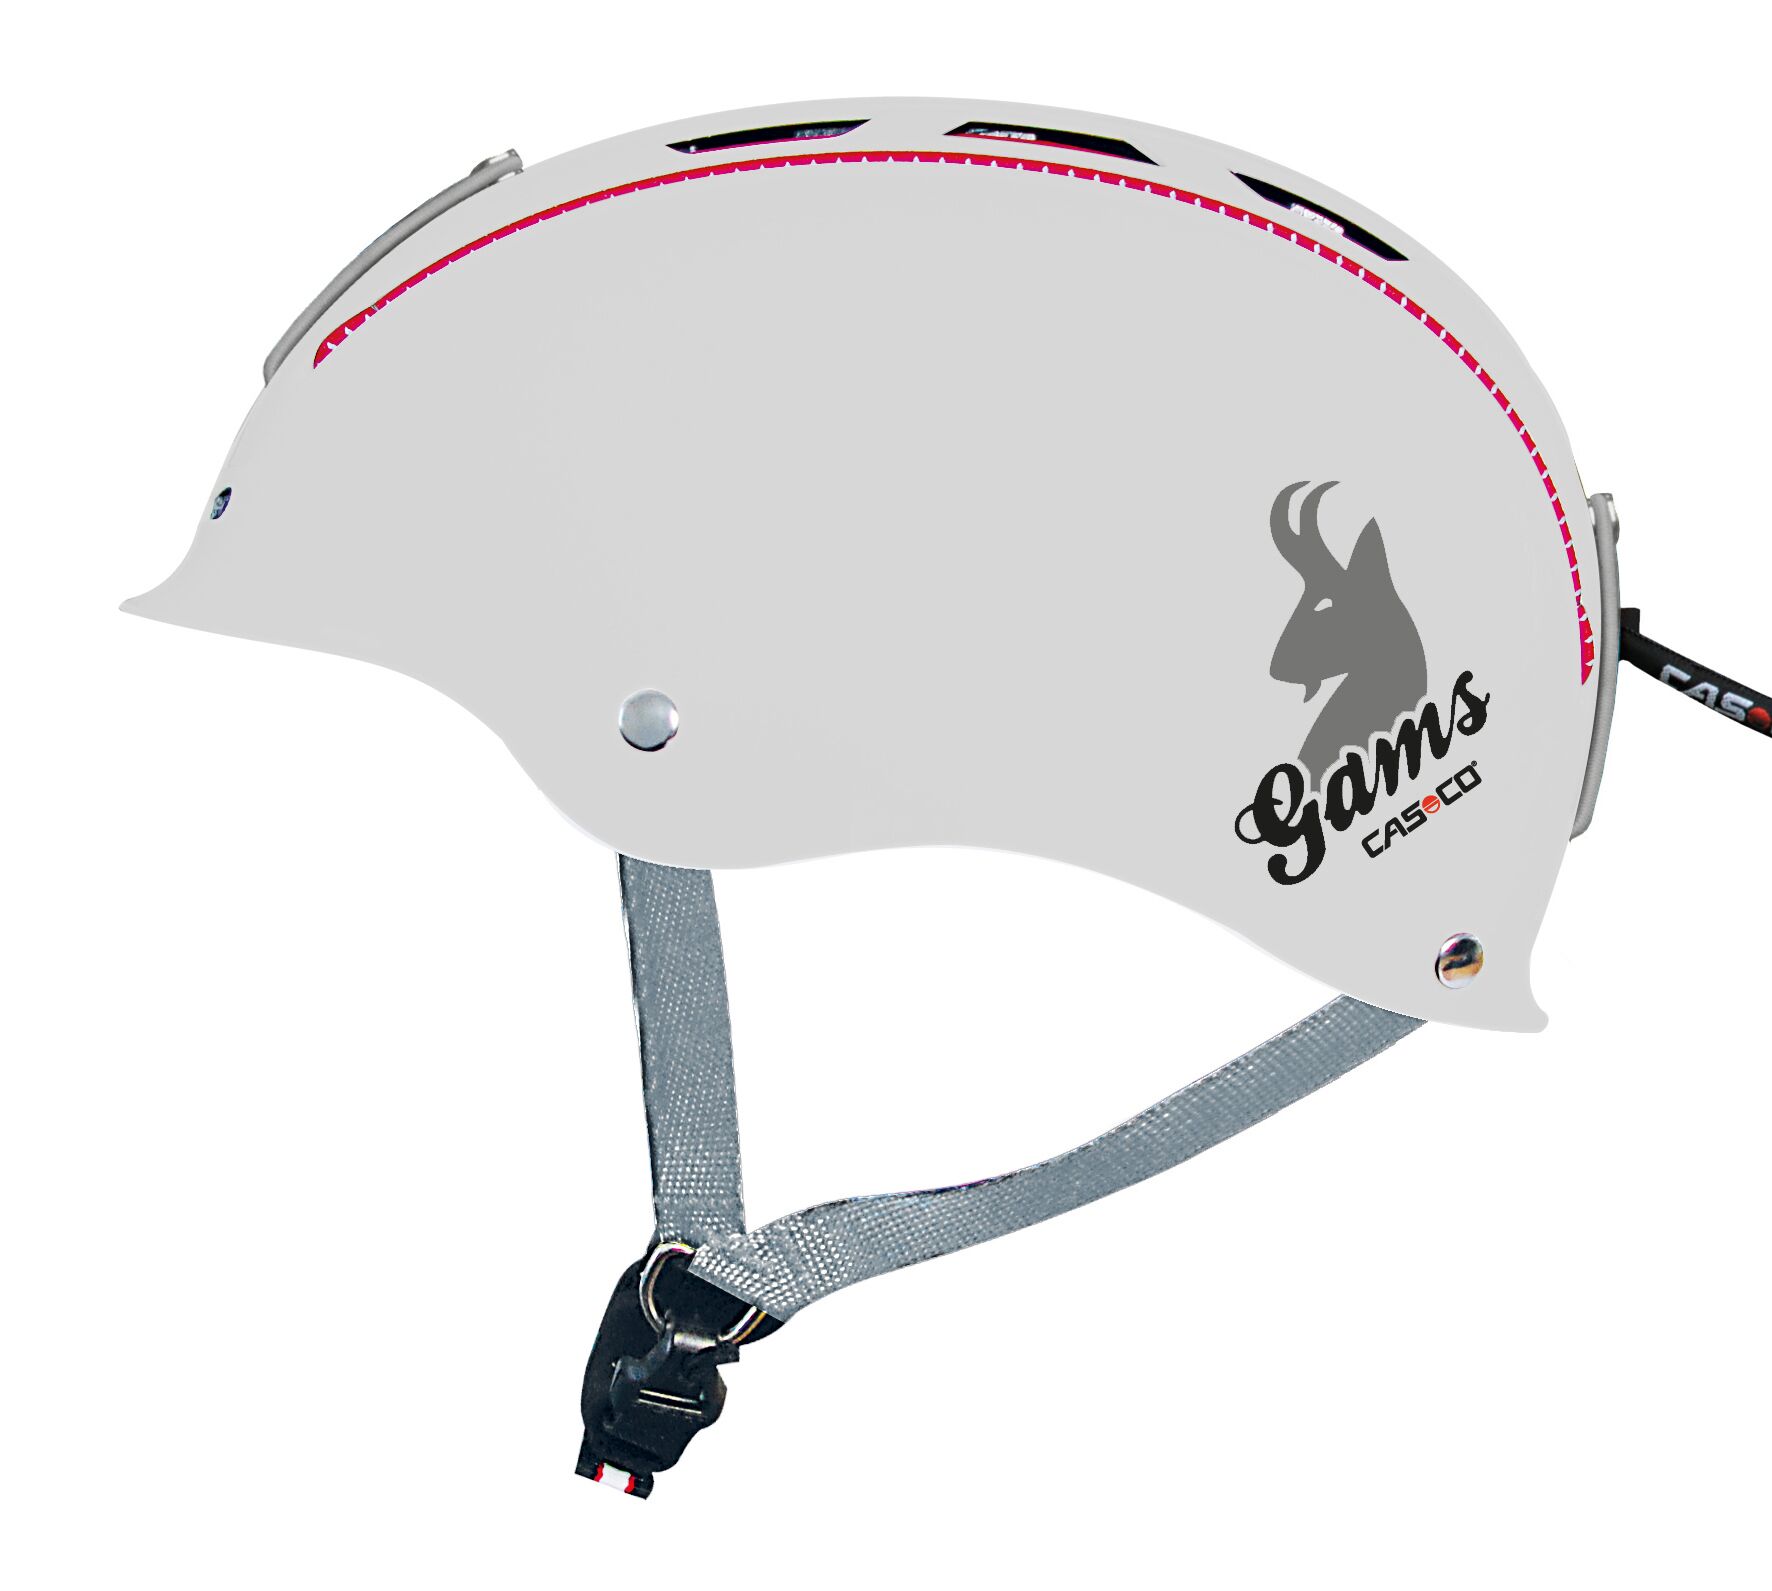 Casco - Gams - Climbing helmet